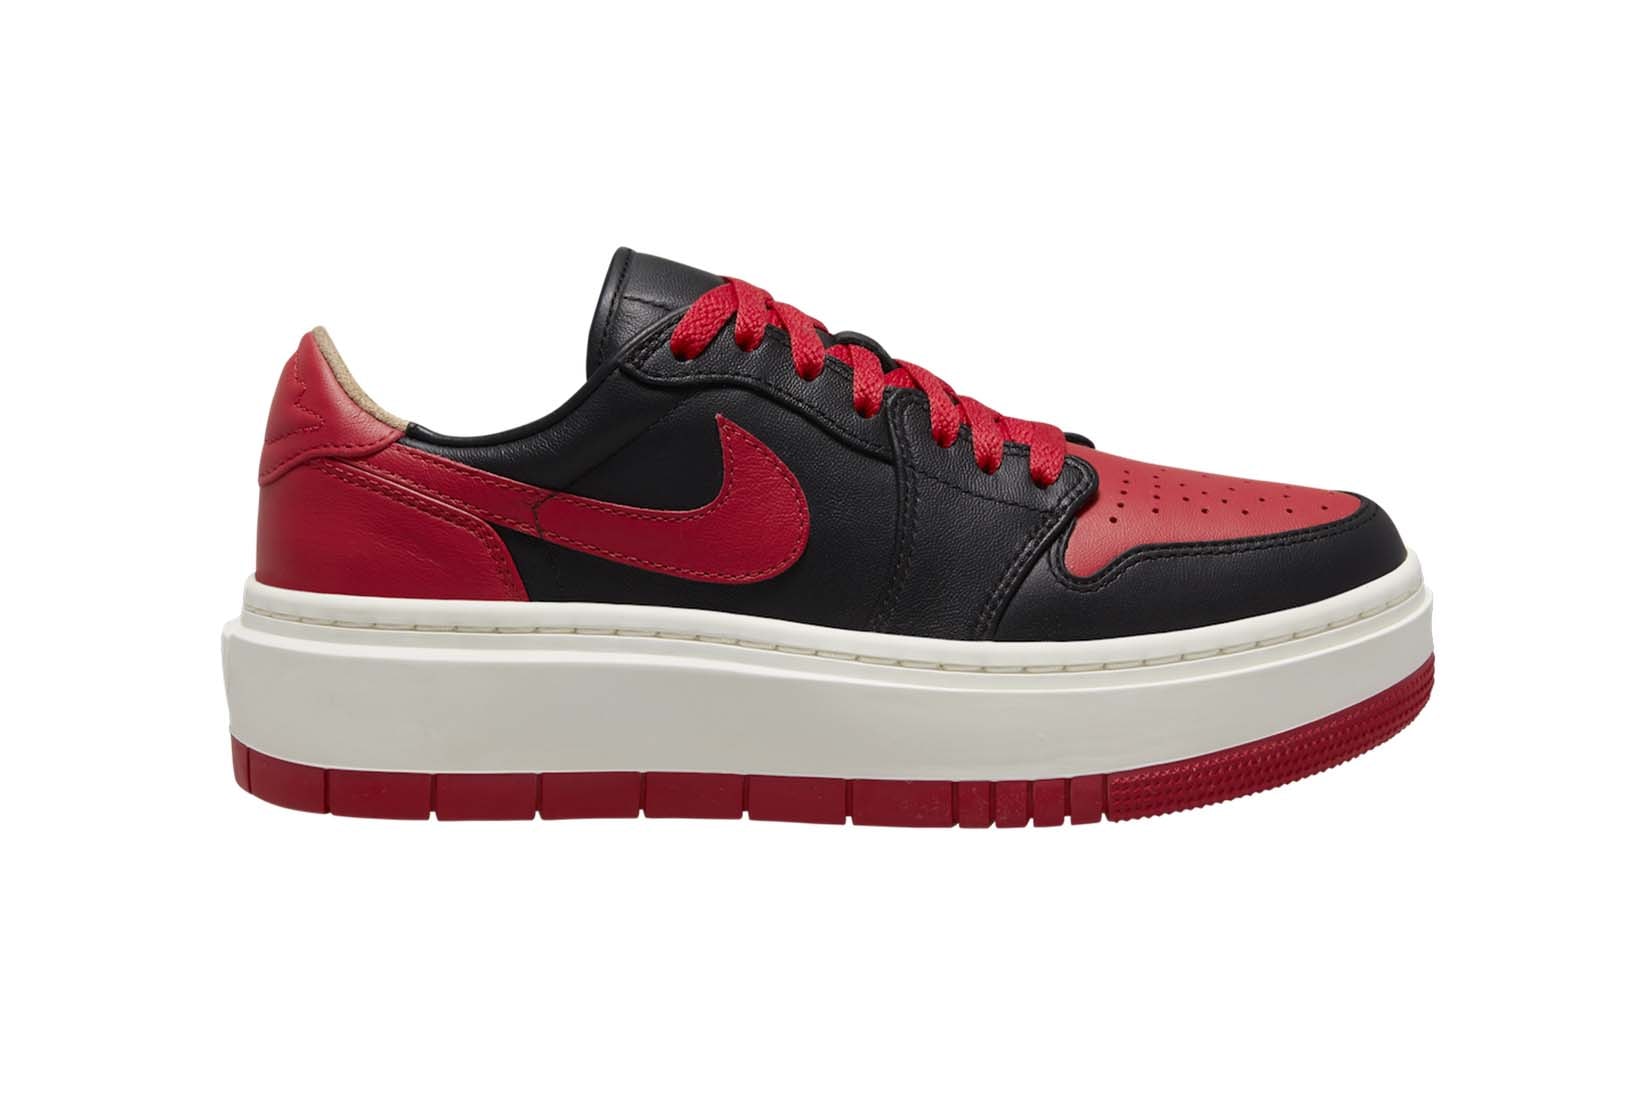 Nike Air Jordan 1 Low LV8D Elevated Platform Sneaker Bred Price Release Date Official Images Anklet